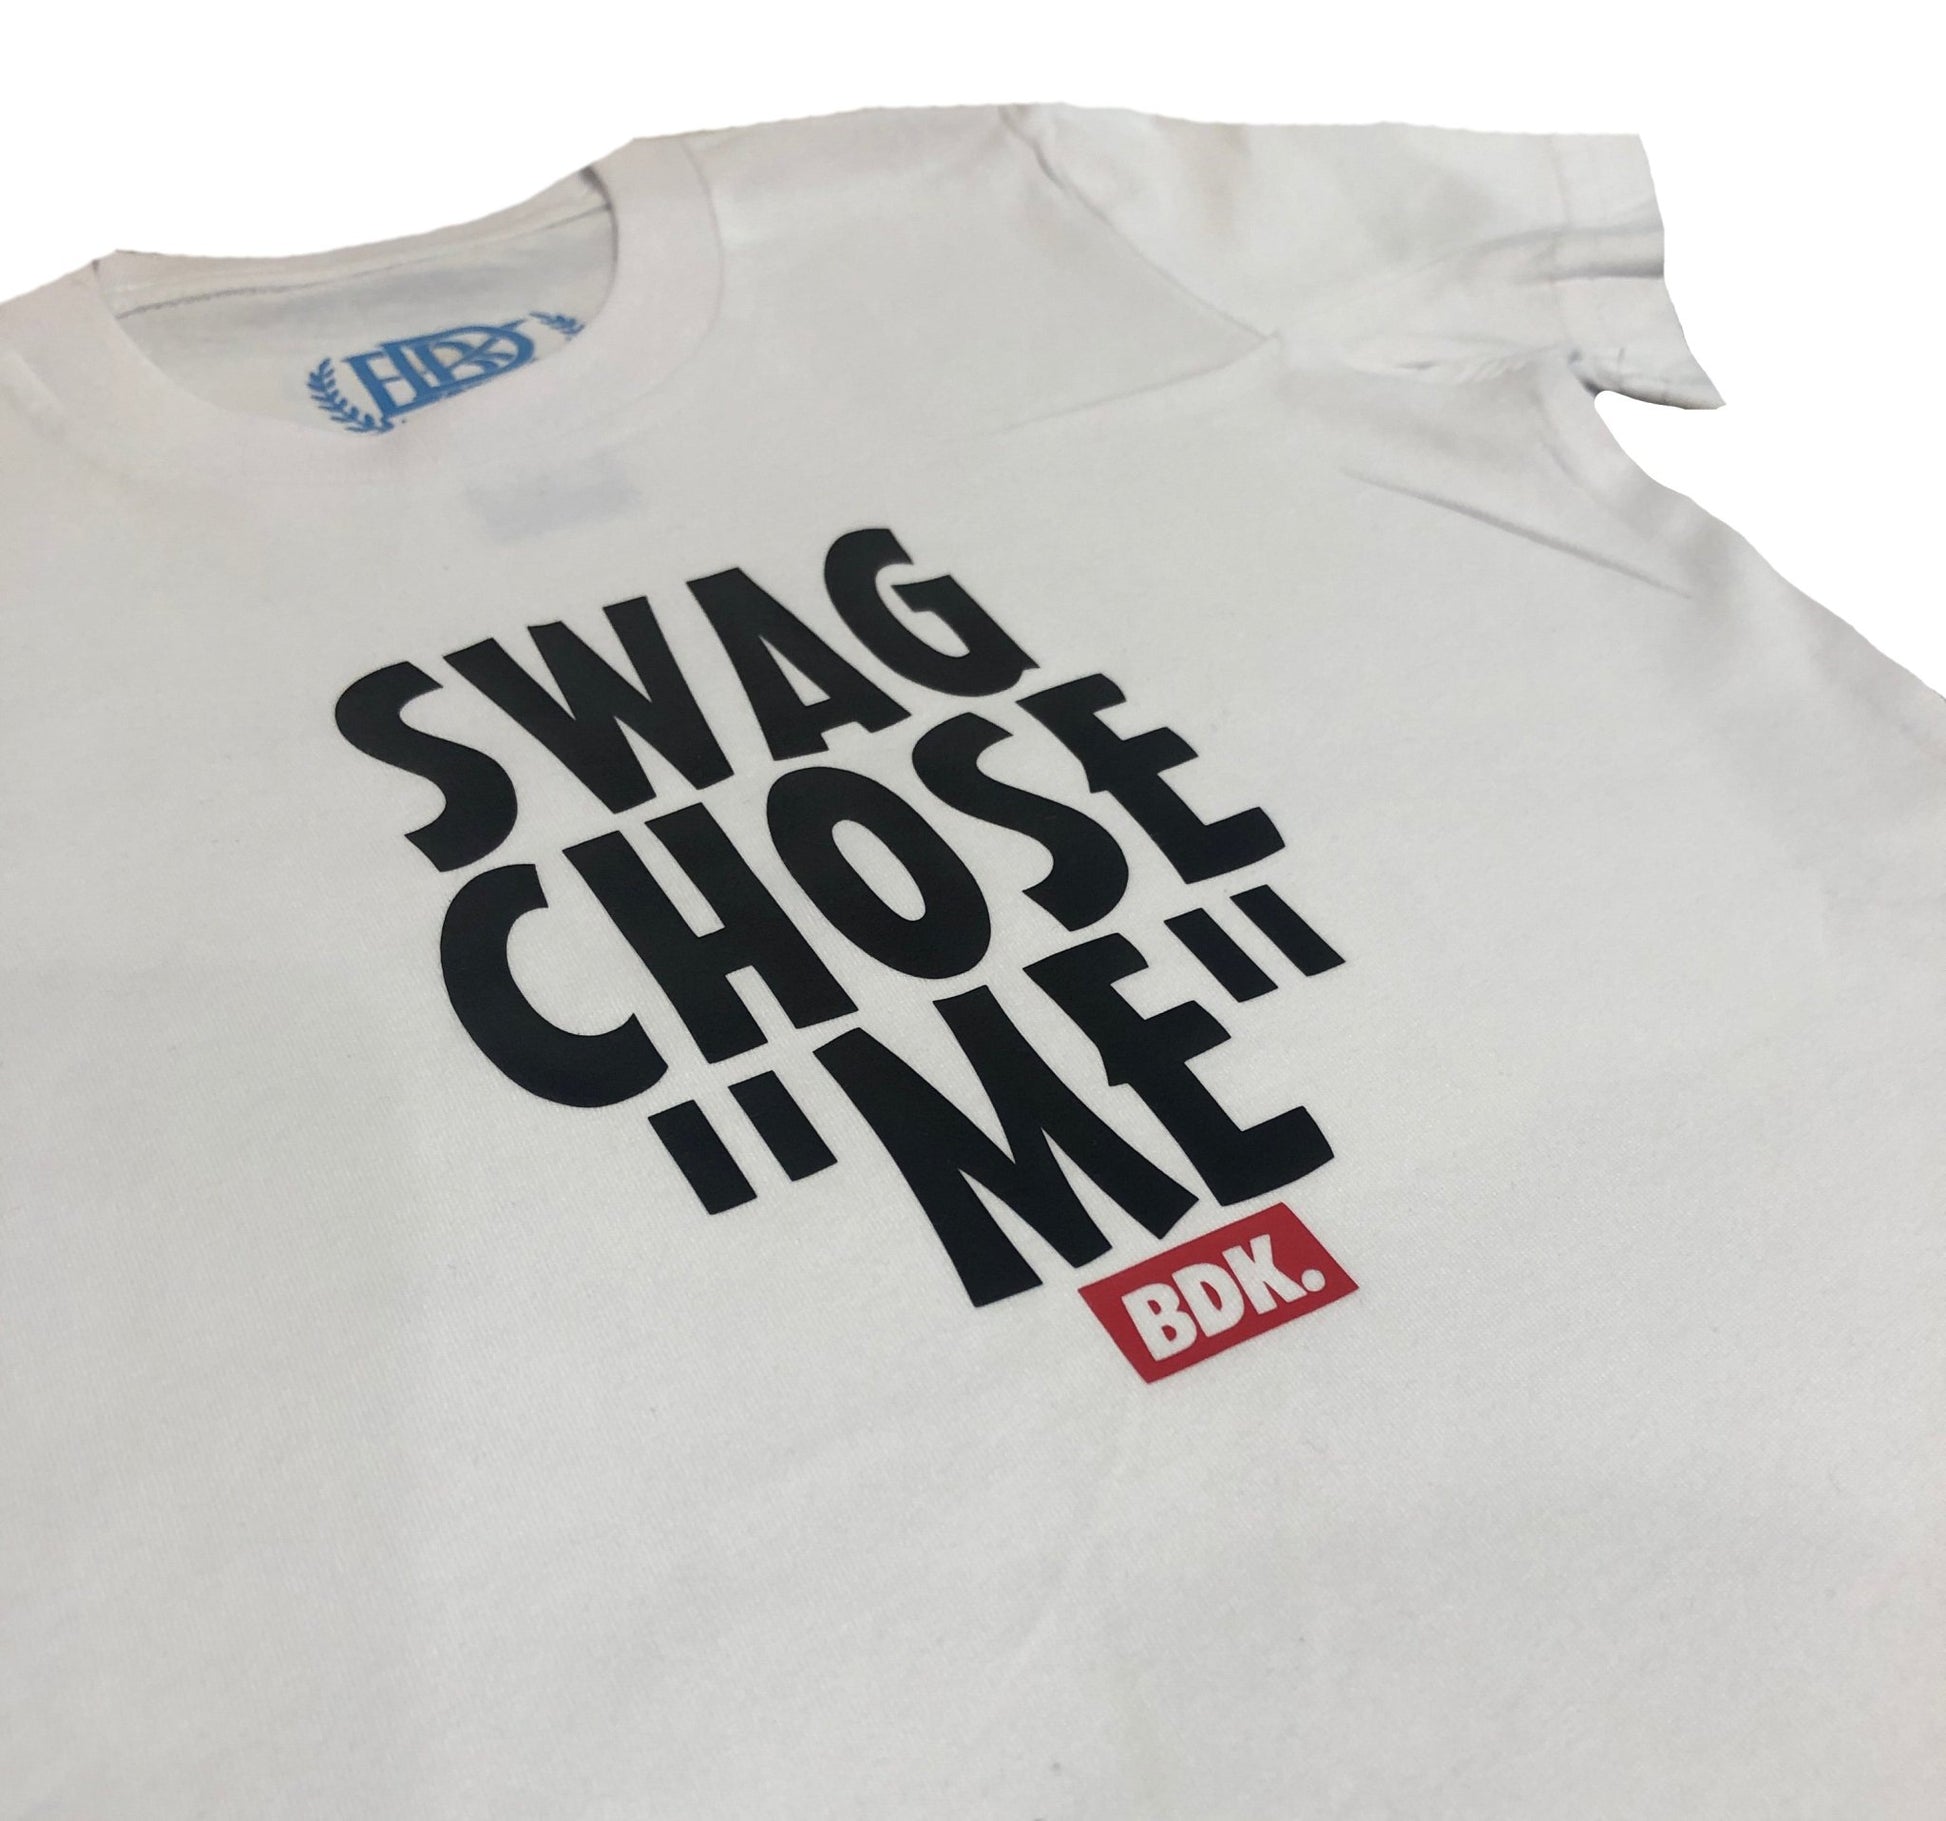 "Swag Chose Me" T Shirt - Babahlu Kids